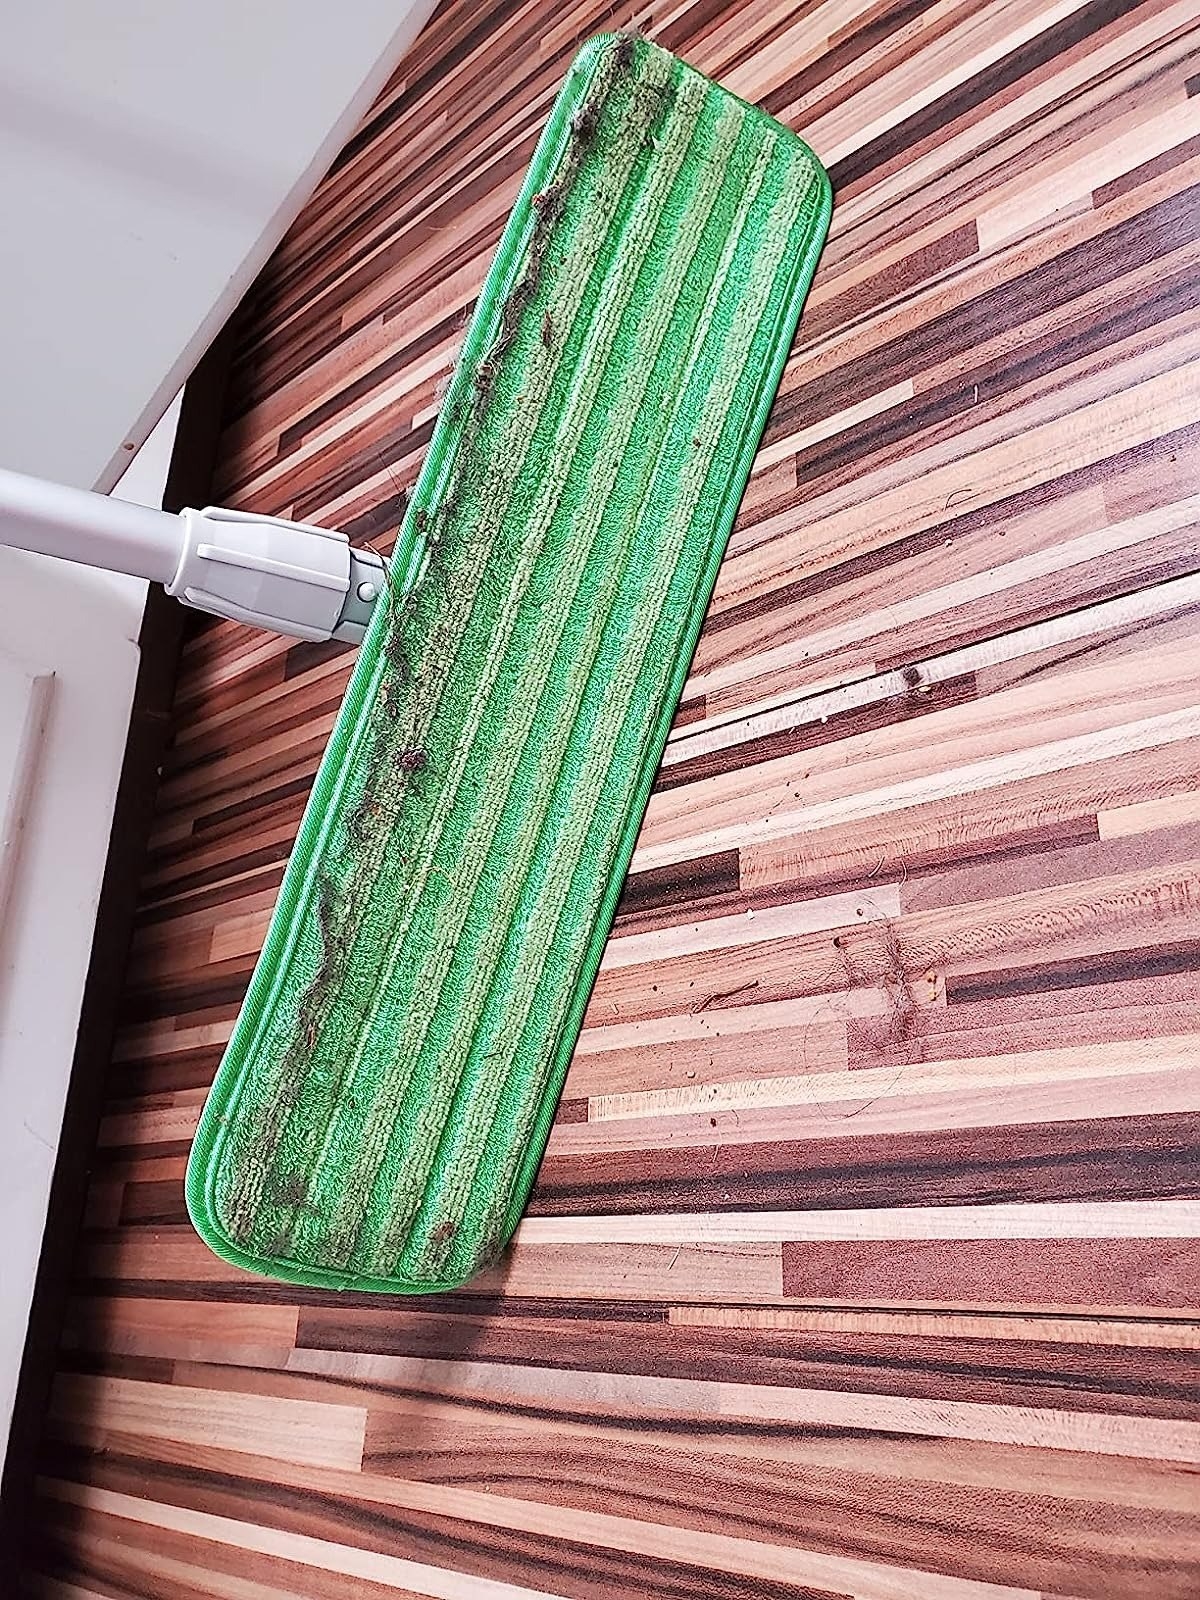 green mop with pet hairs above hardwood floor